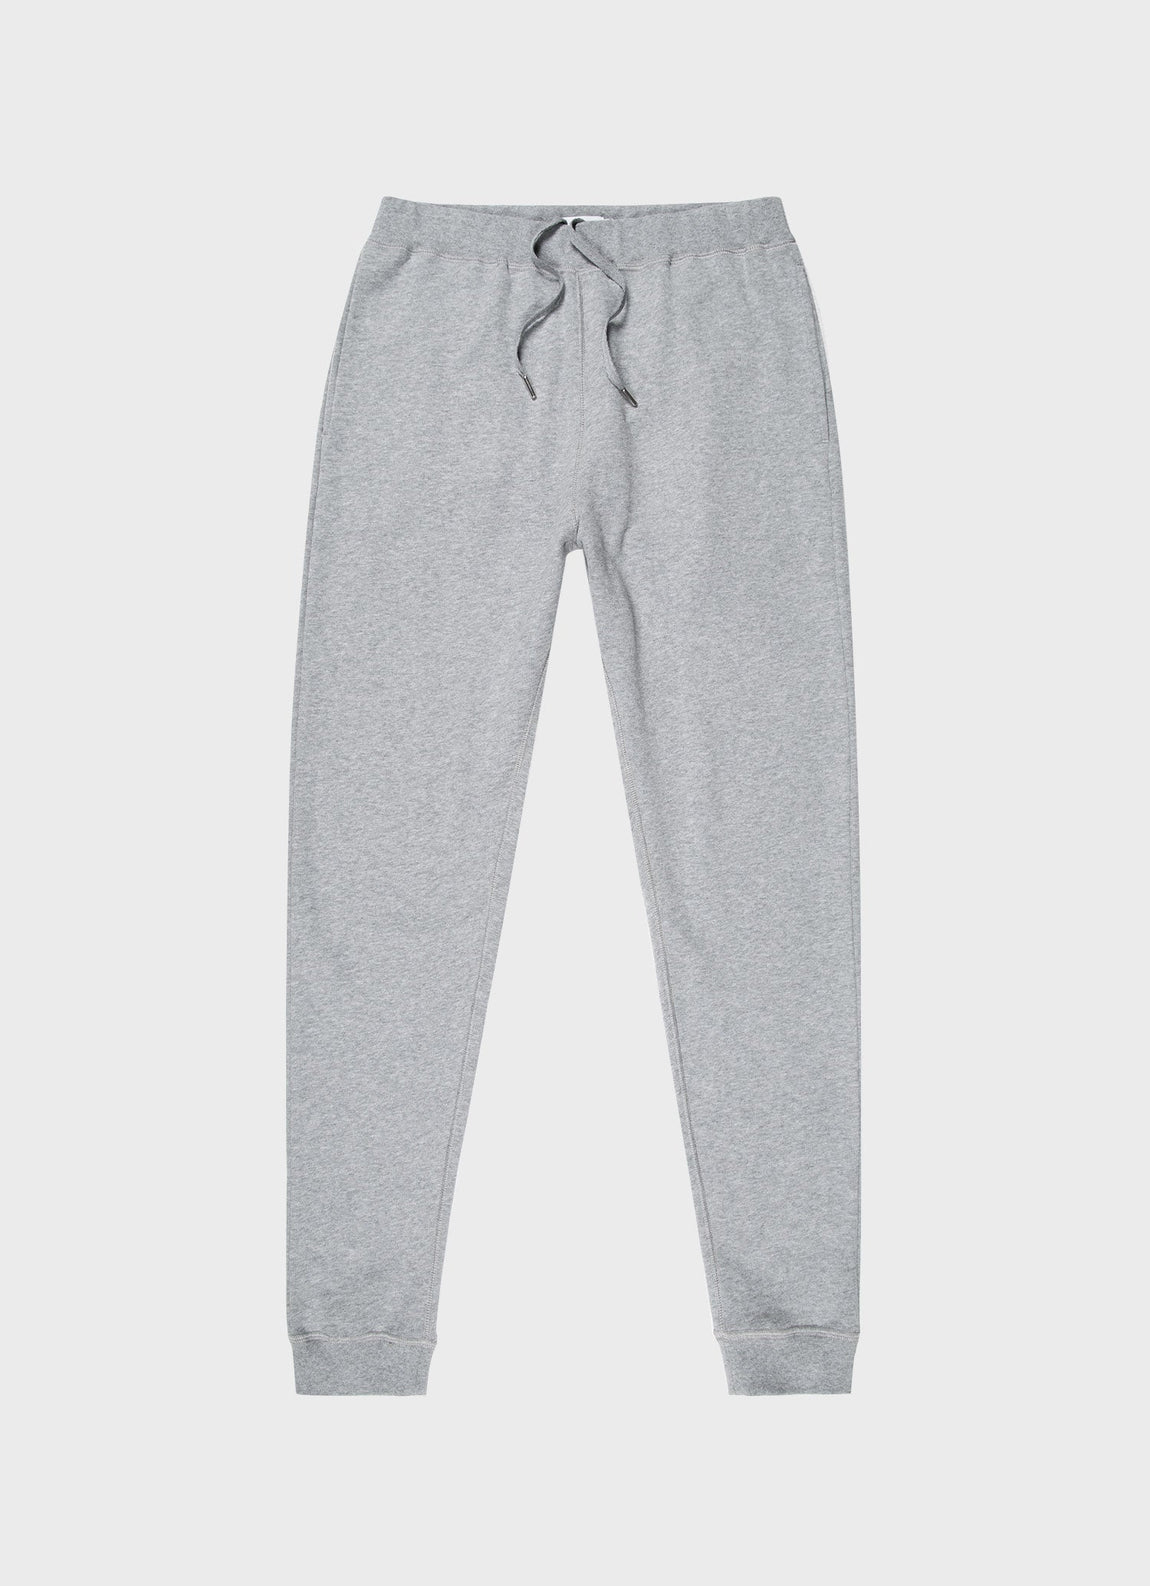 Men's Loopback Sweatpants in Grey Melange